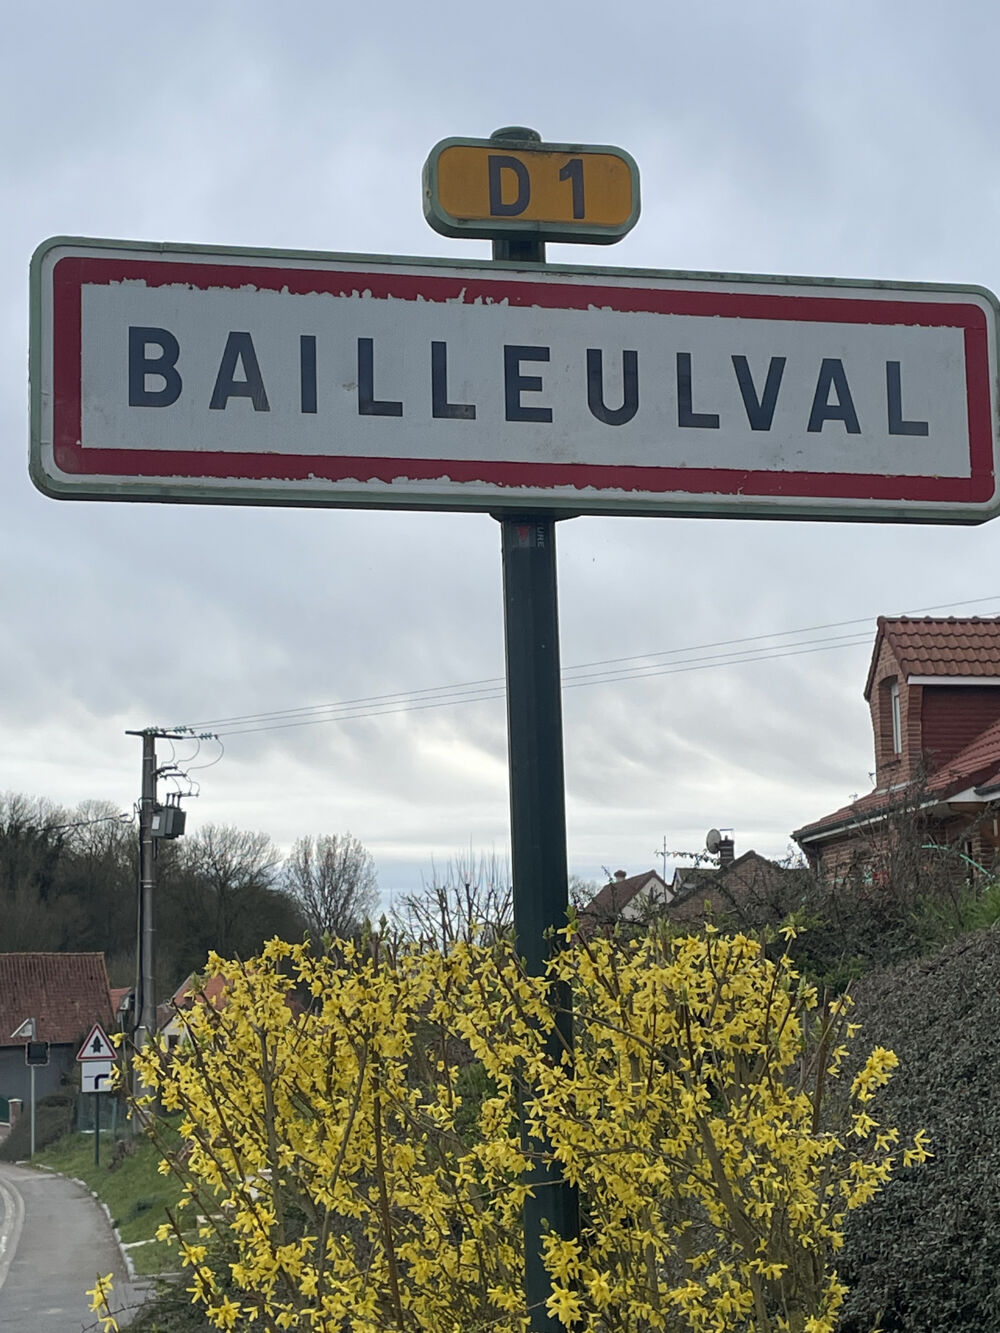 Vente Terrain Bailleulval : terrain proche d Arras avec Le TUC IMMO VIMY Bailleulval